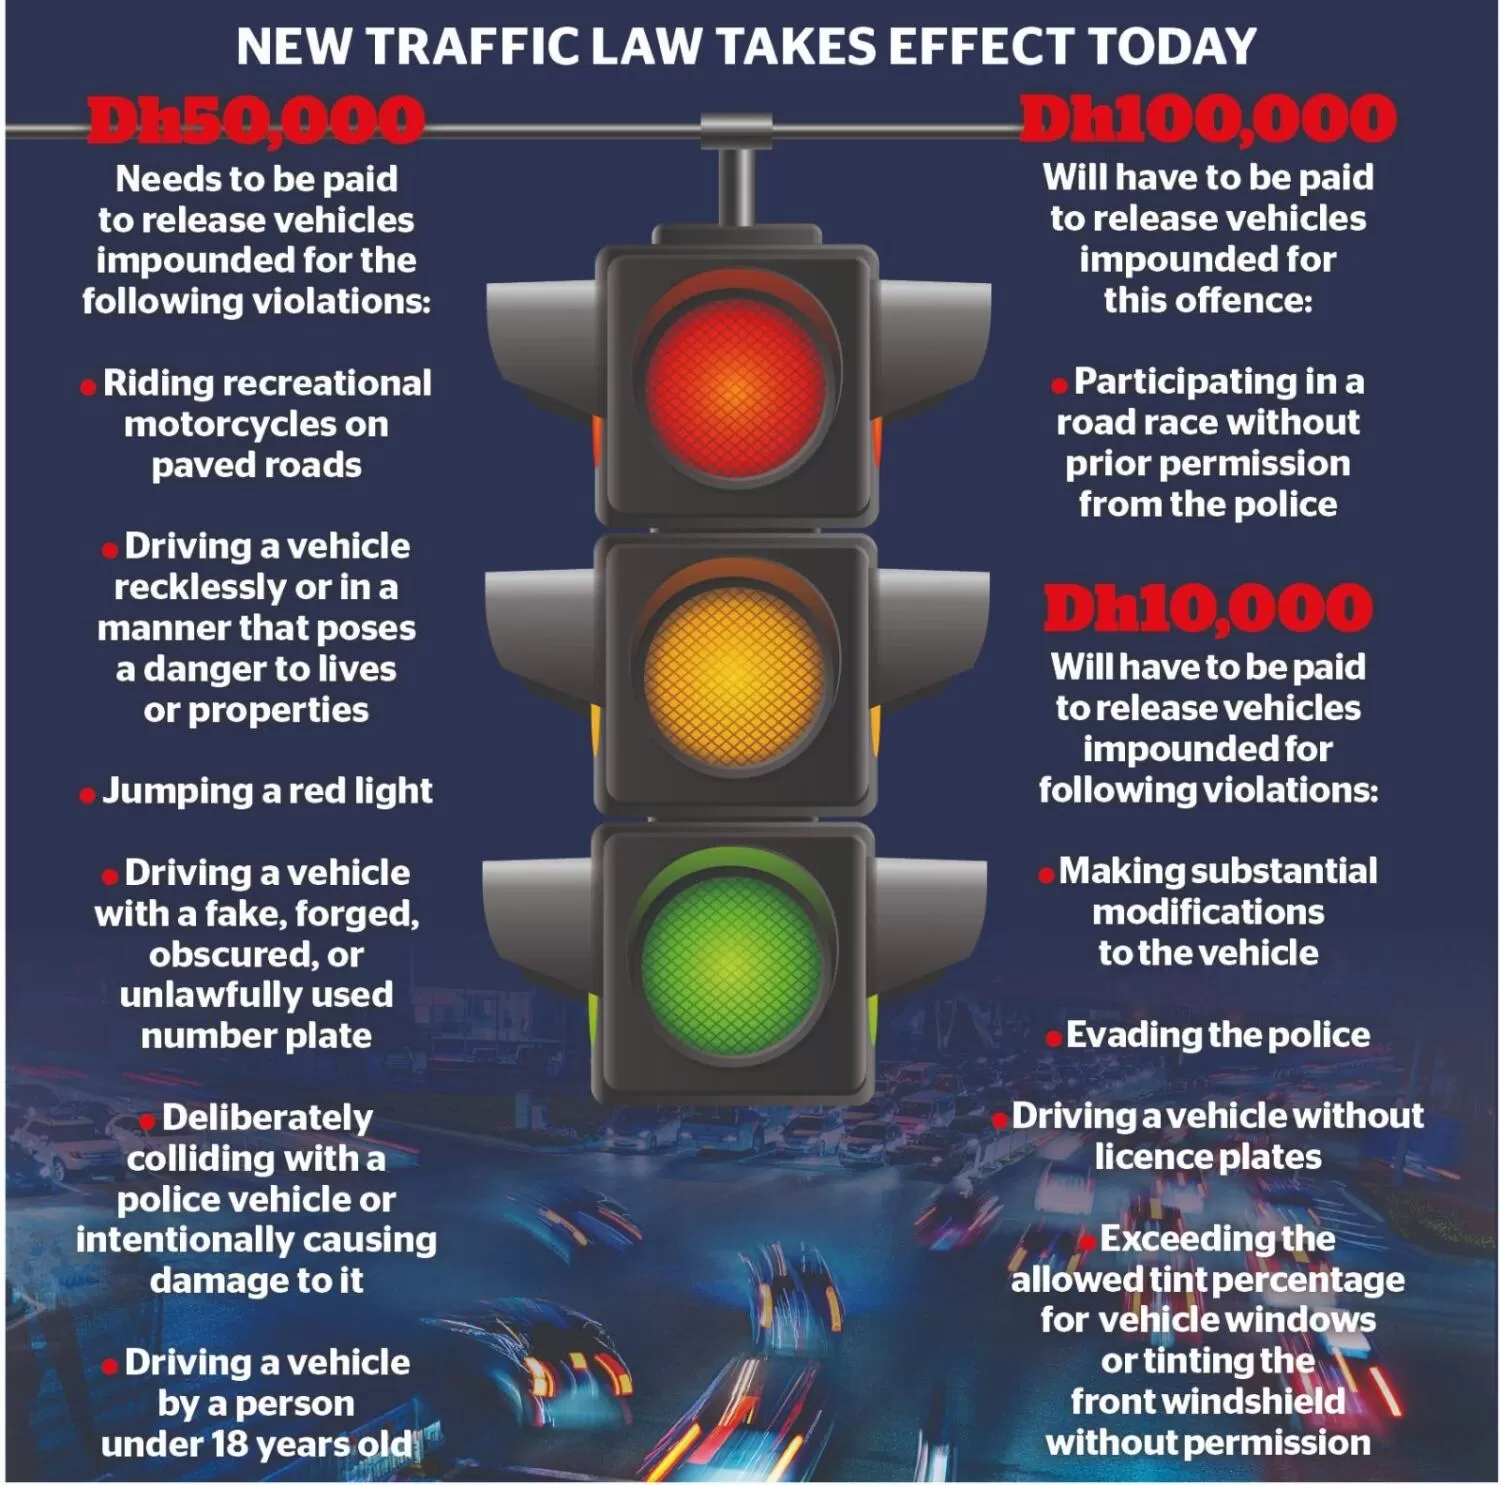 Dubai's new traffic laws 